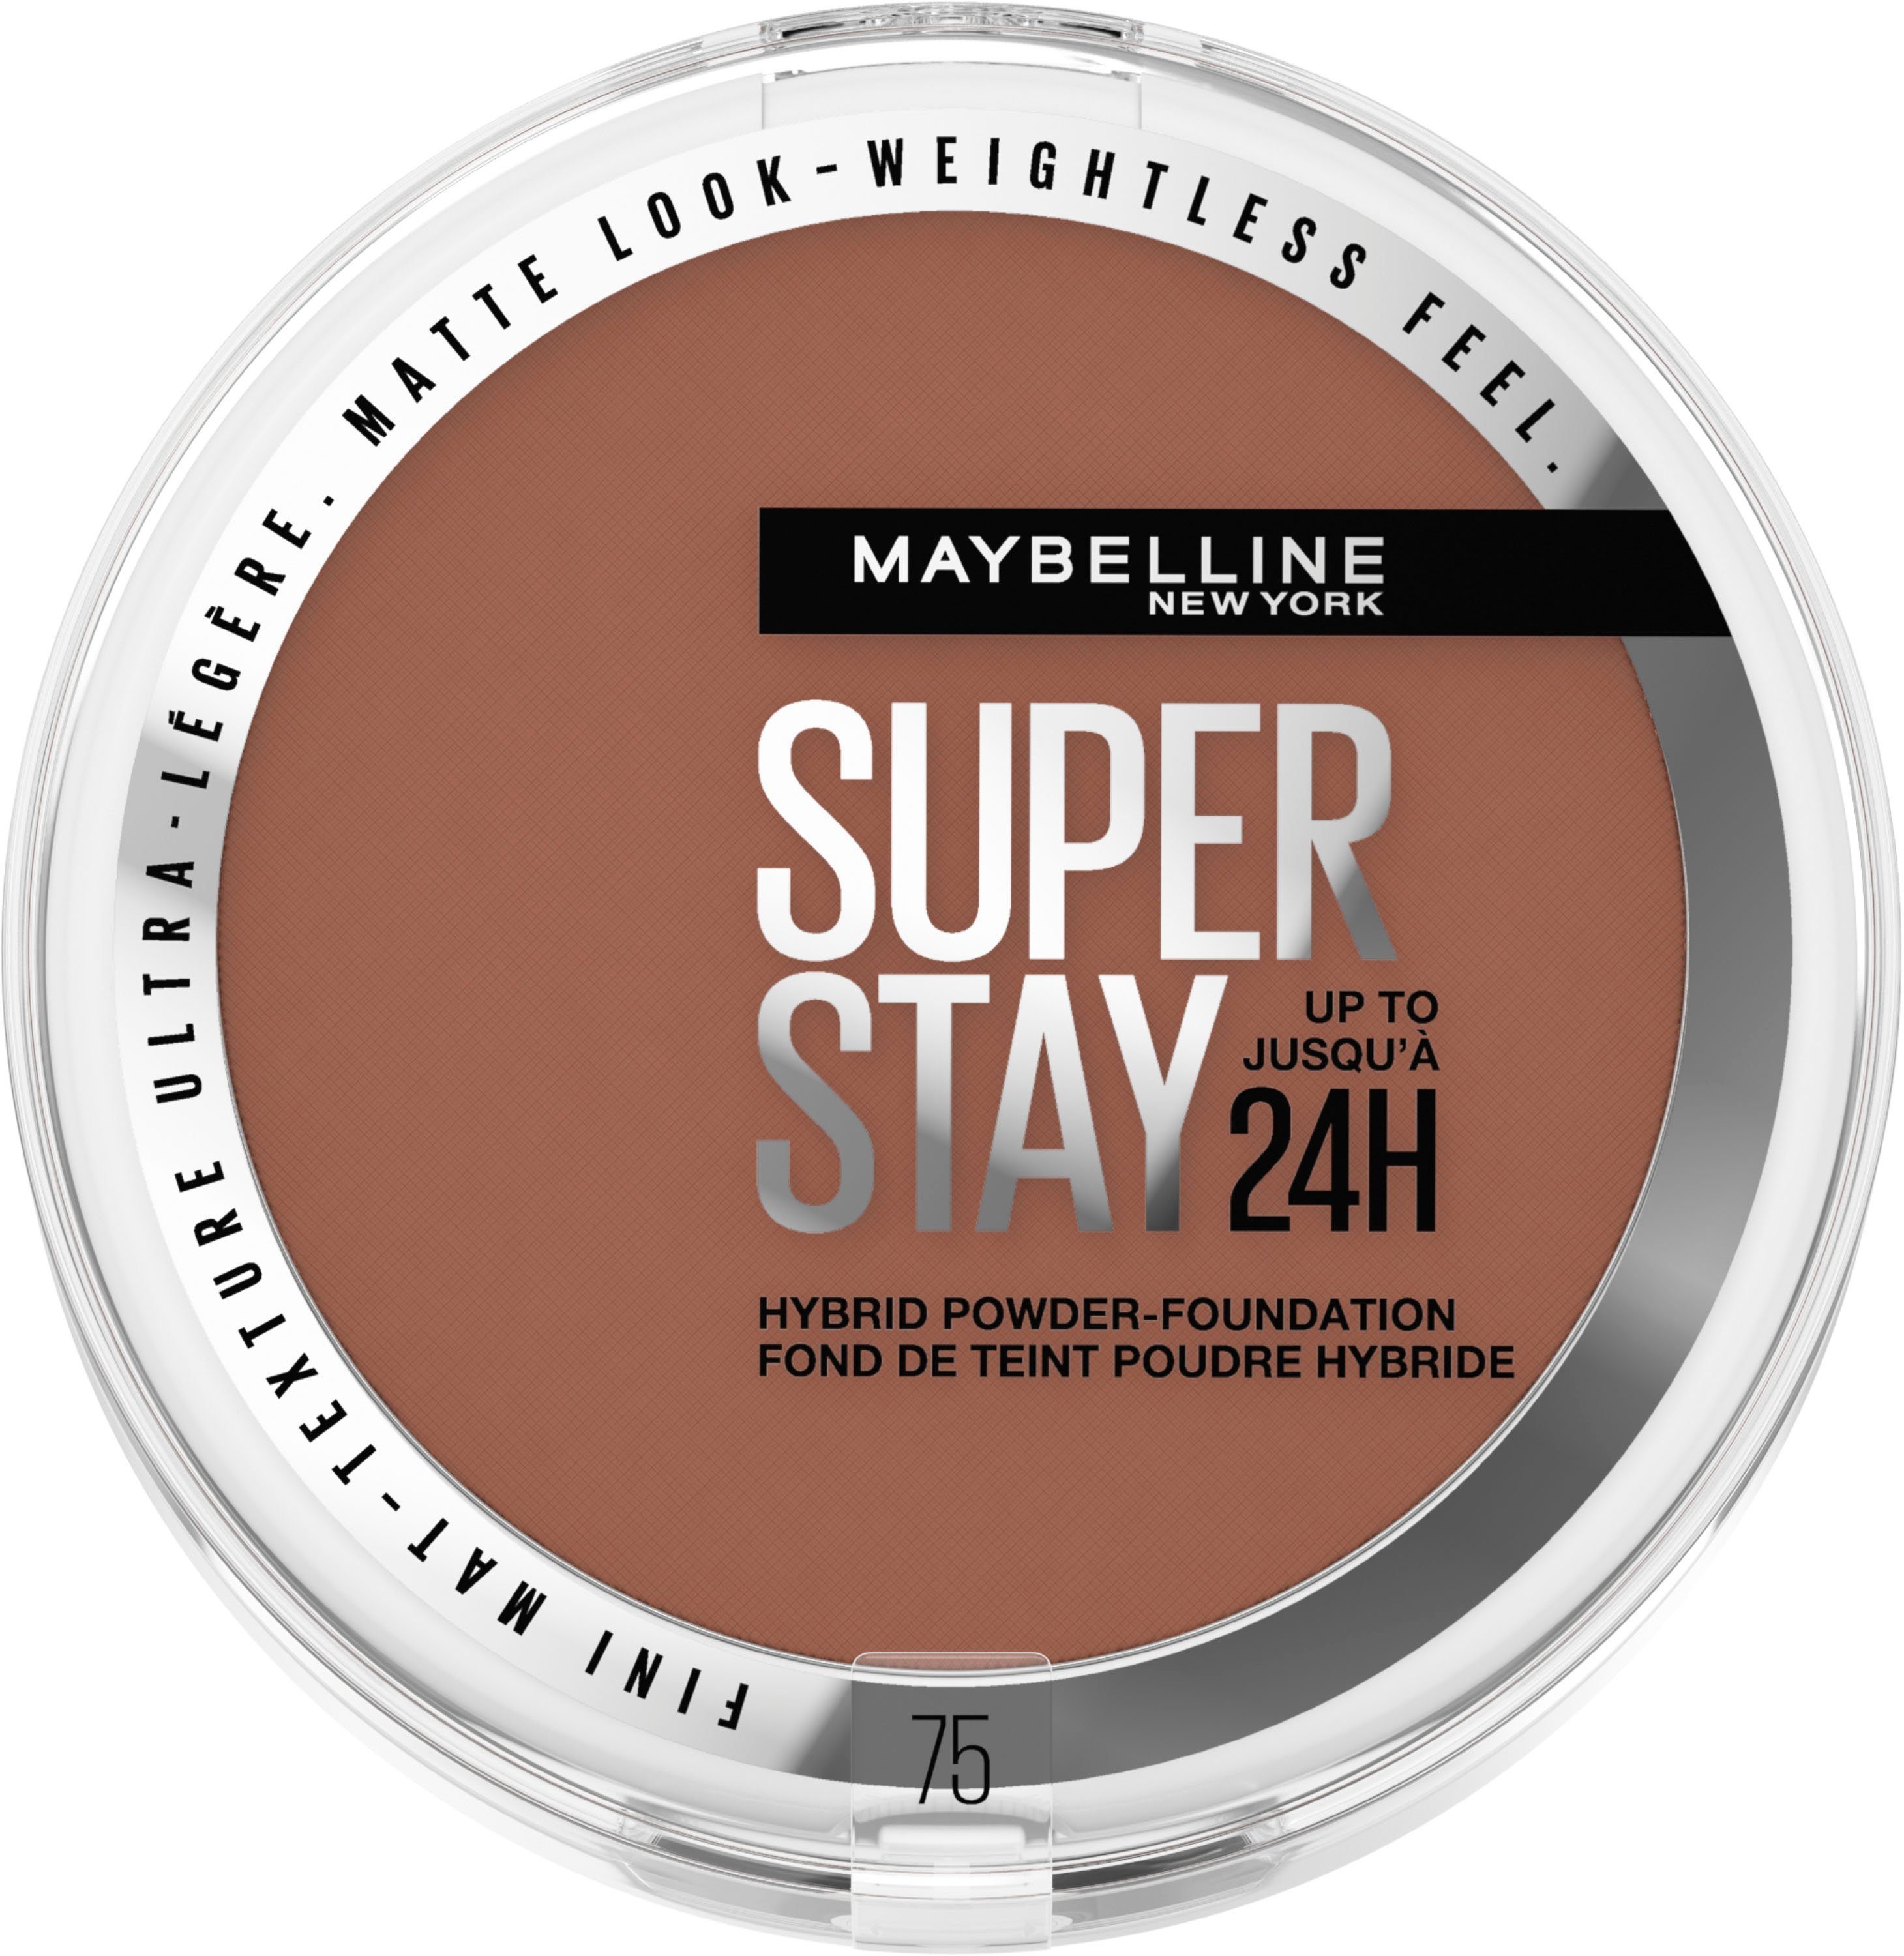 NEW Super Foundation New MAYBELLINE Maybelline York Hybrides Puder Make-Up YORK Stay